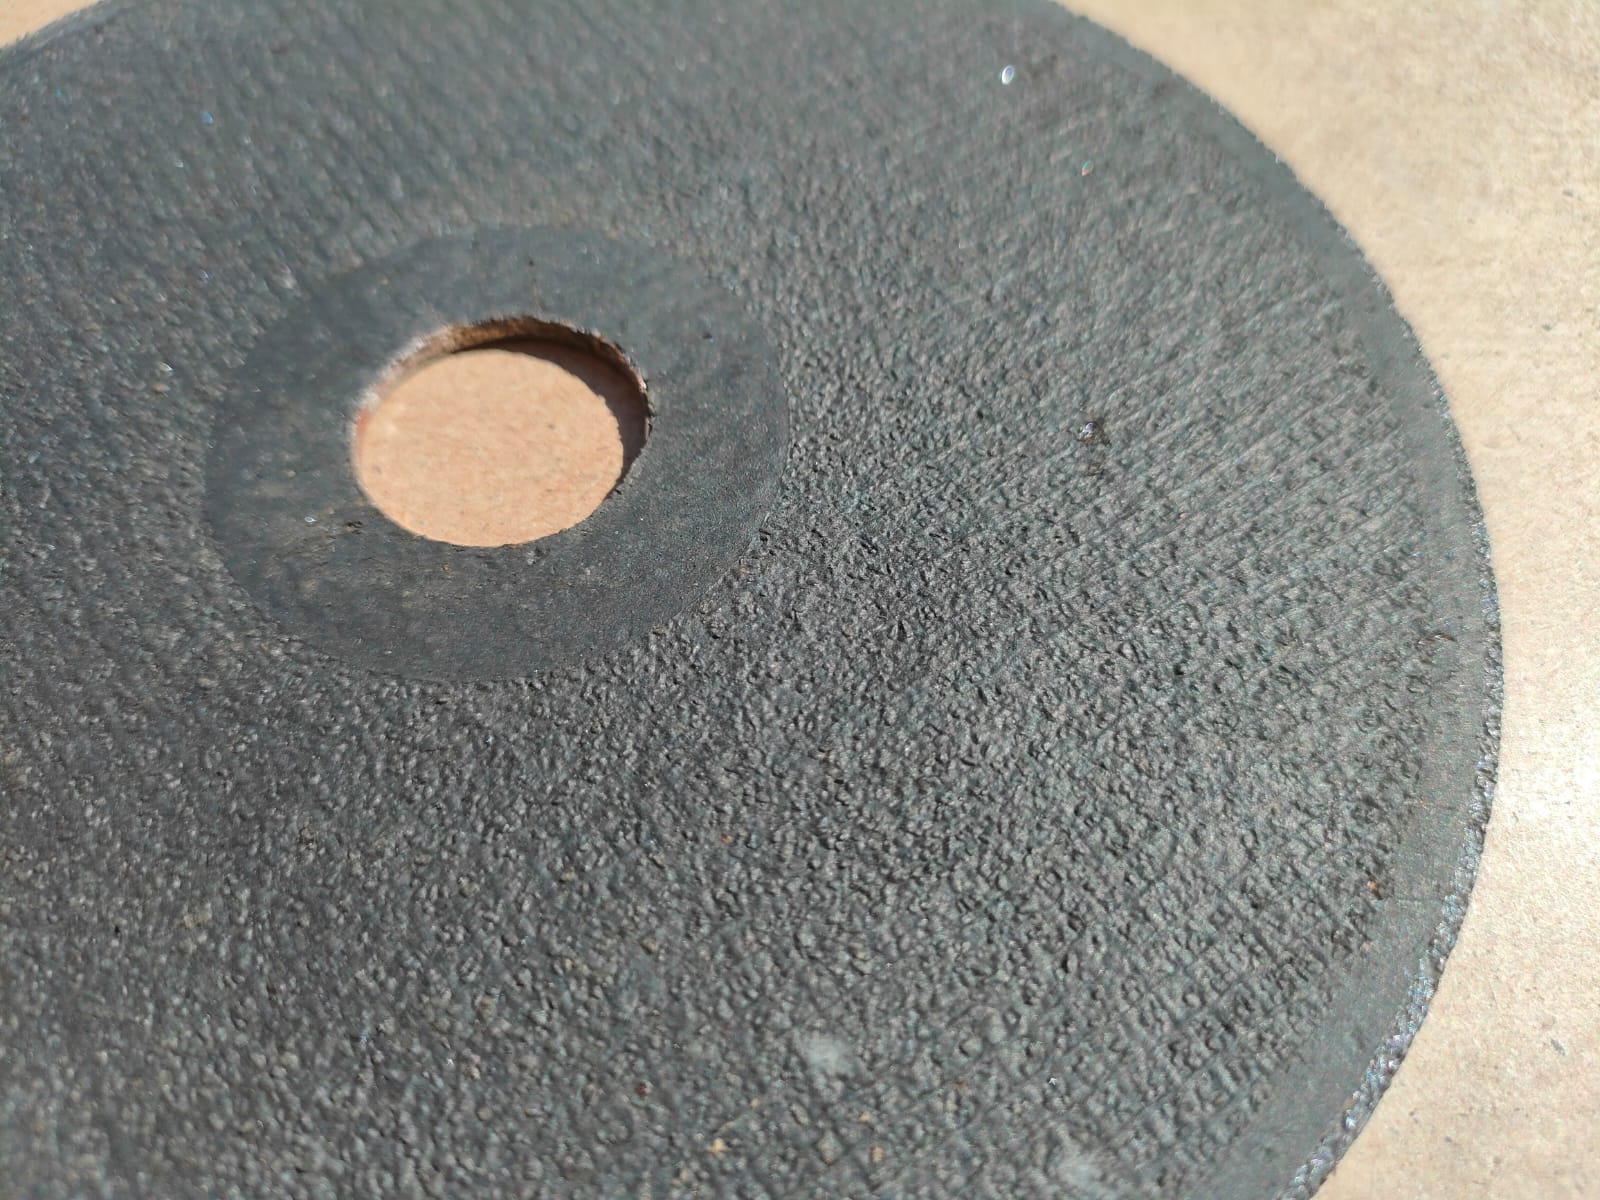 Круг (диск) отрезной по камню для болгарки (УШМ) 150 х 2,5 х 22,23 ЛУГА (1 шт)